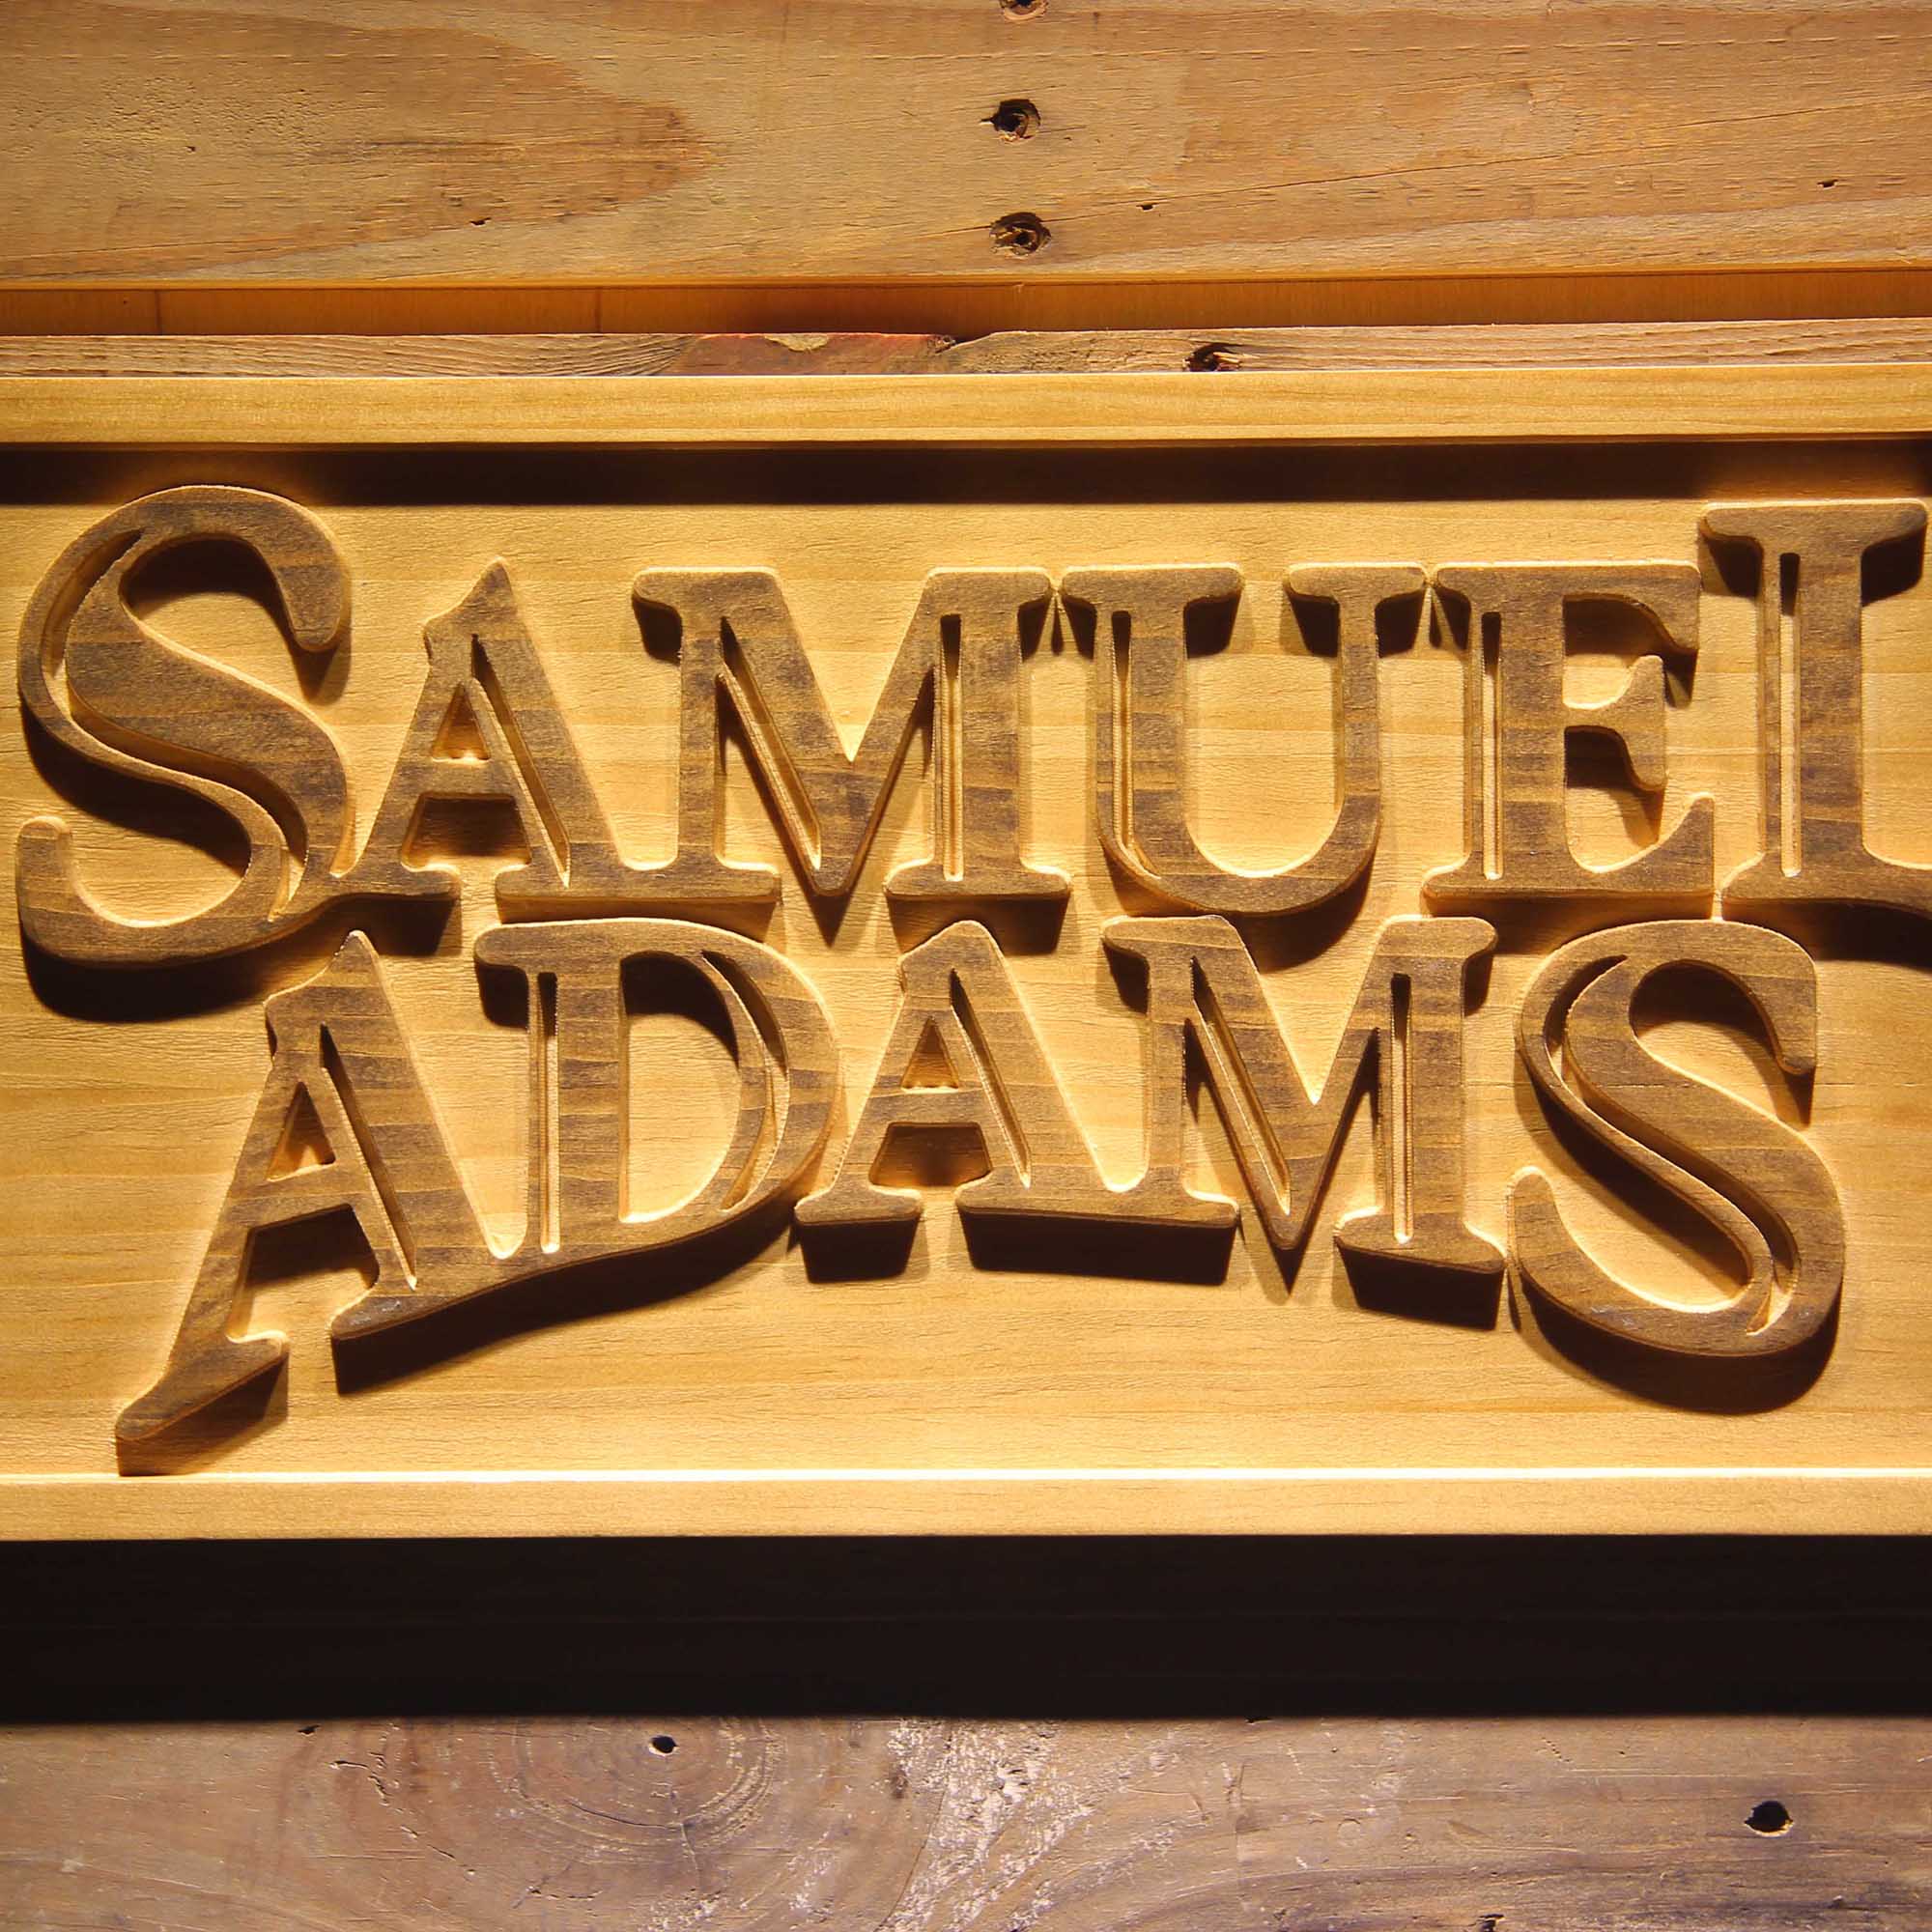 Samuel Adams 3D Wooden Engrave Sign